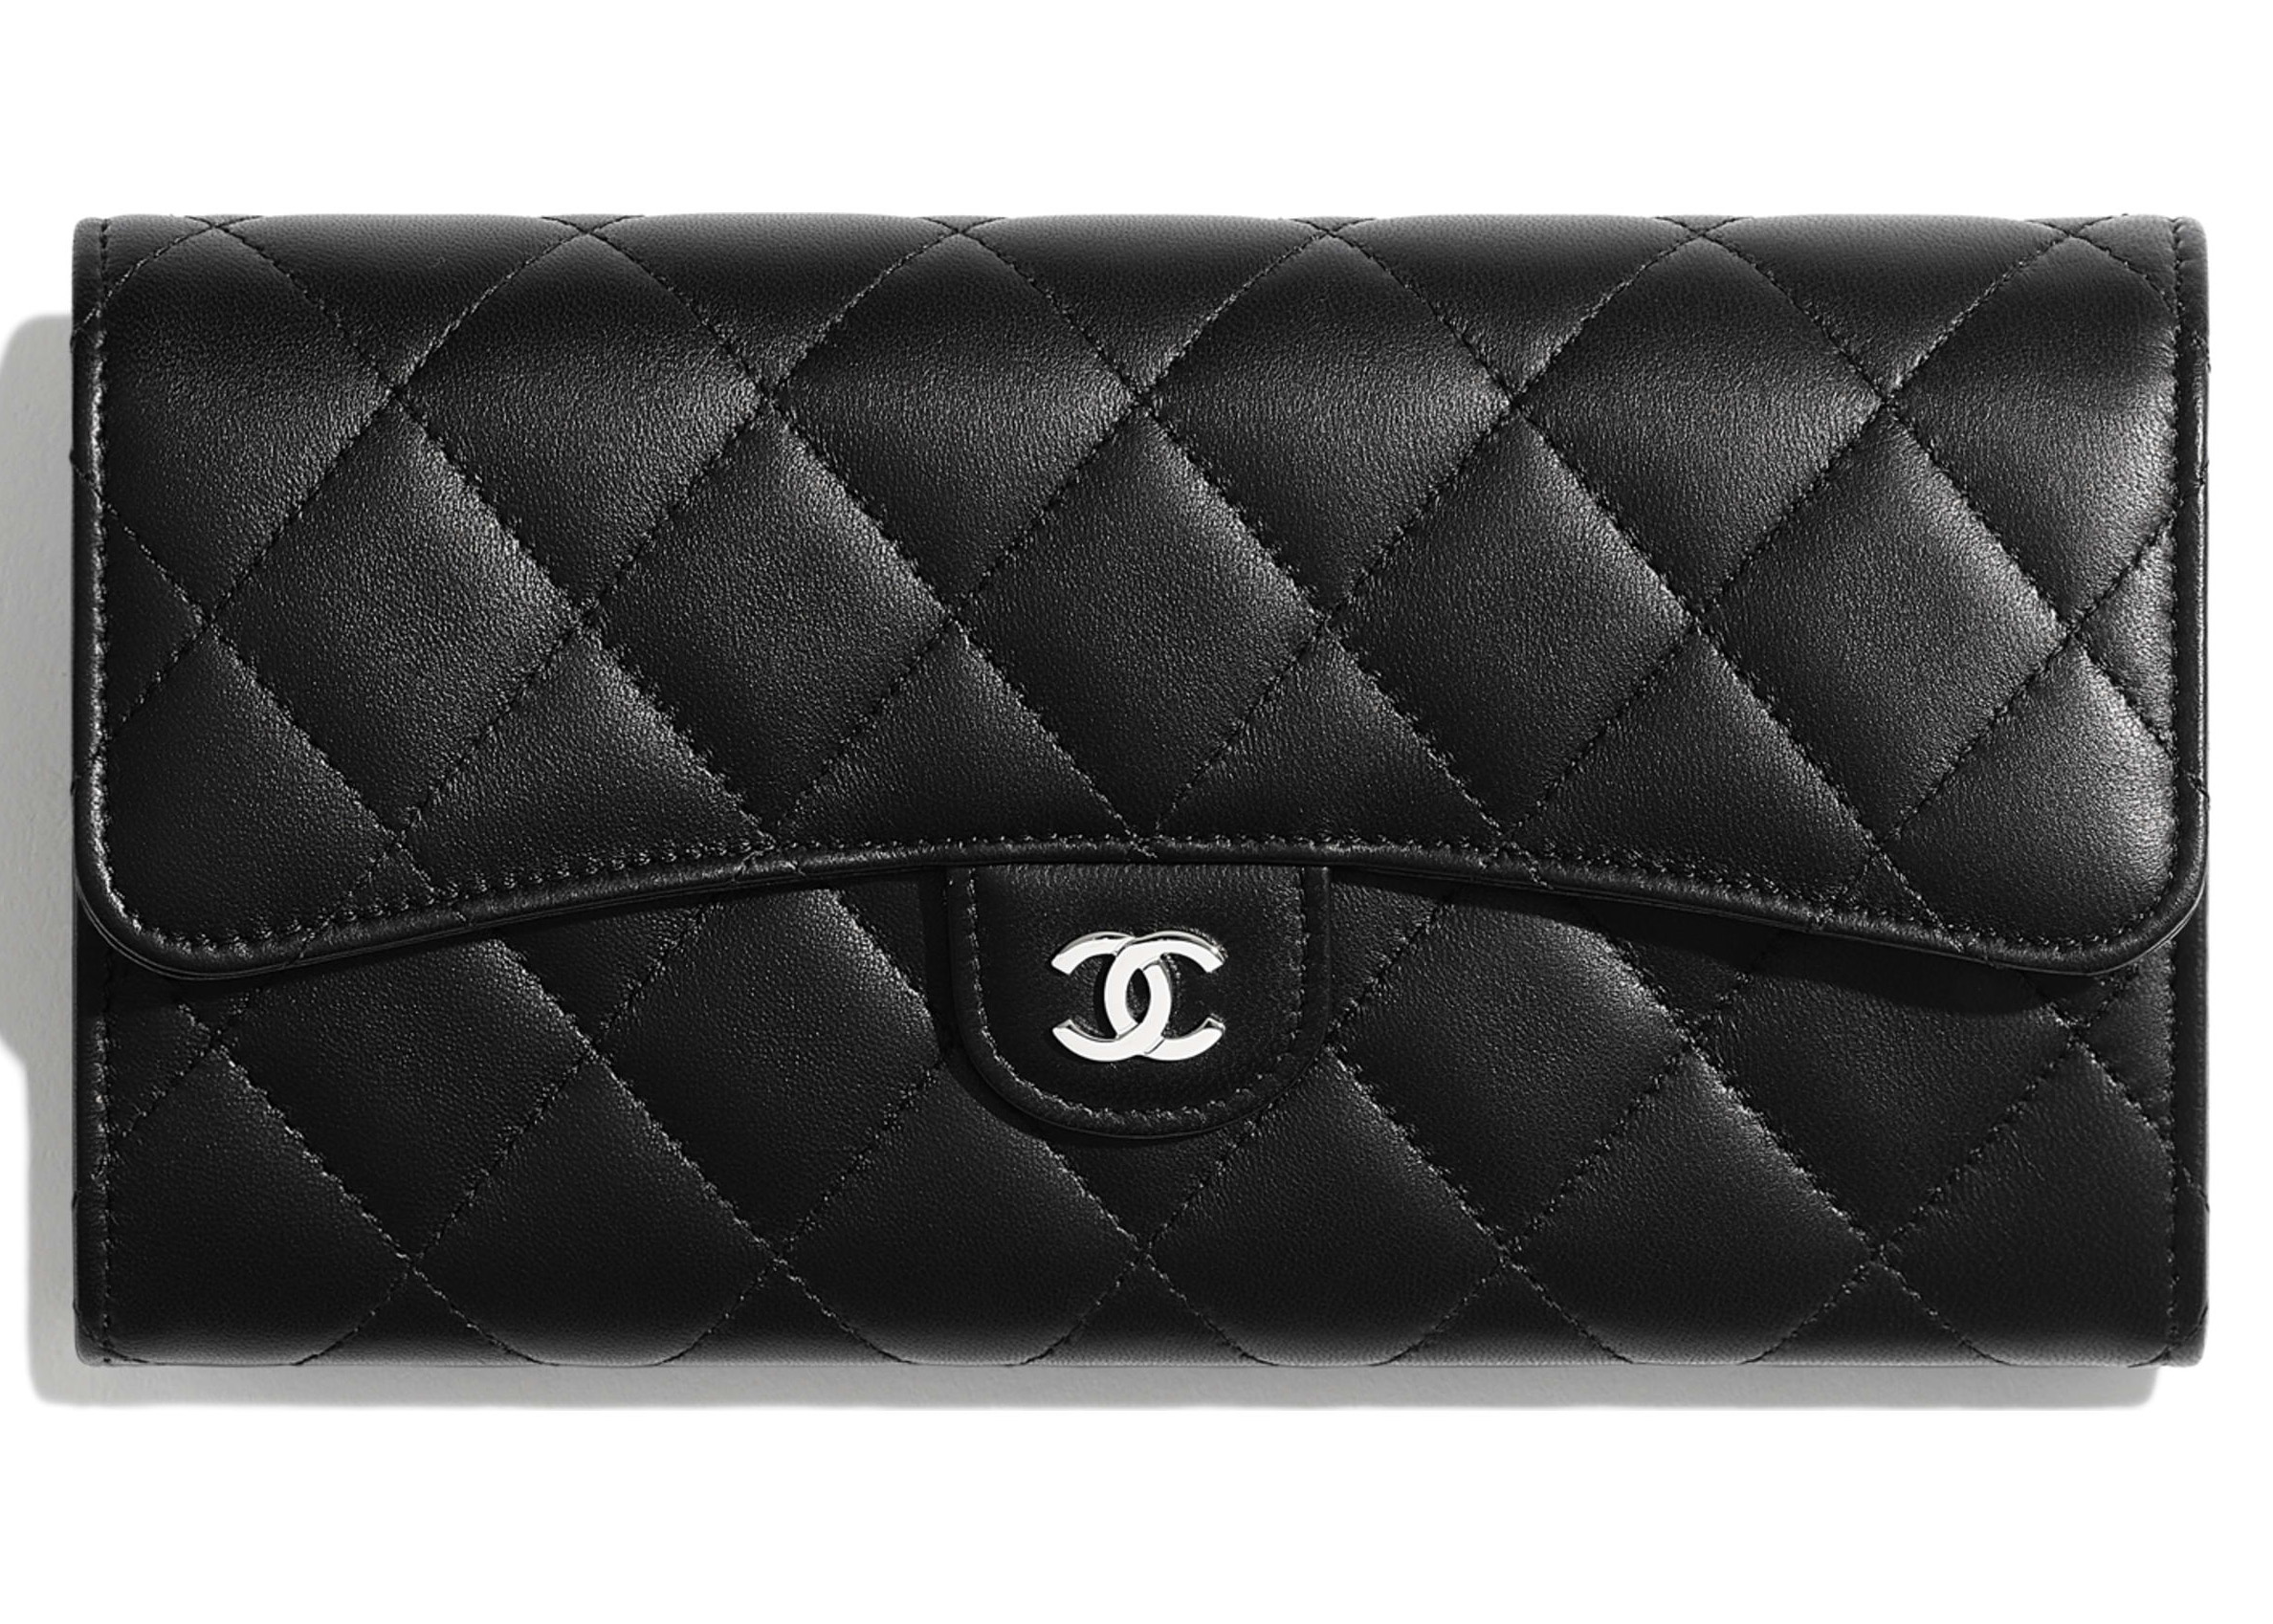 Chanel CLASSIC SMALL FLAP WALLET Grained Calfskin  GoldTone Metal Black   Hàng hiệu 11 HVip